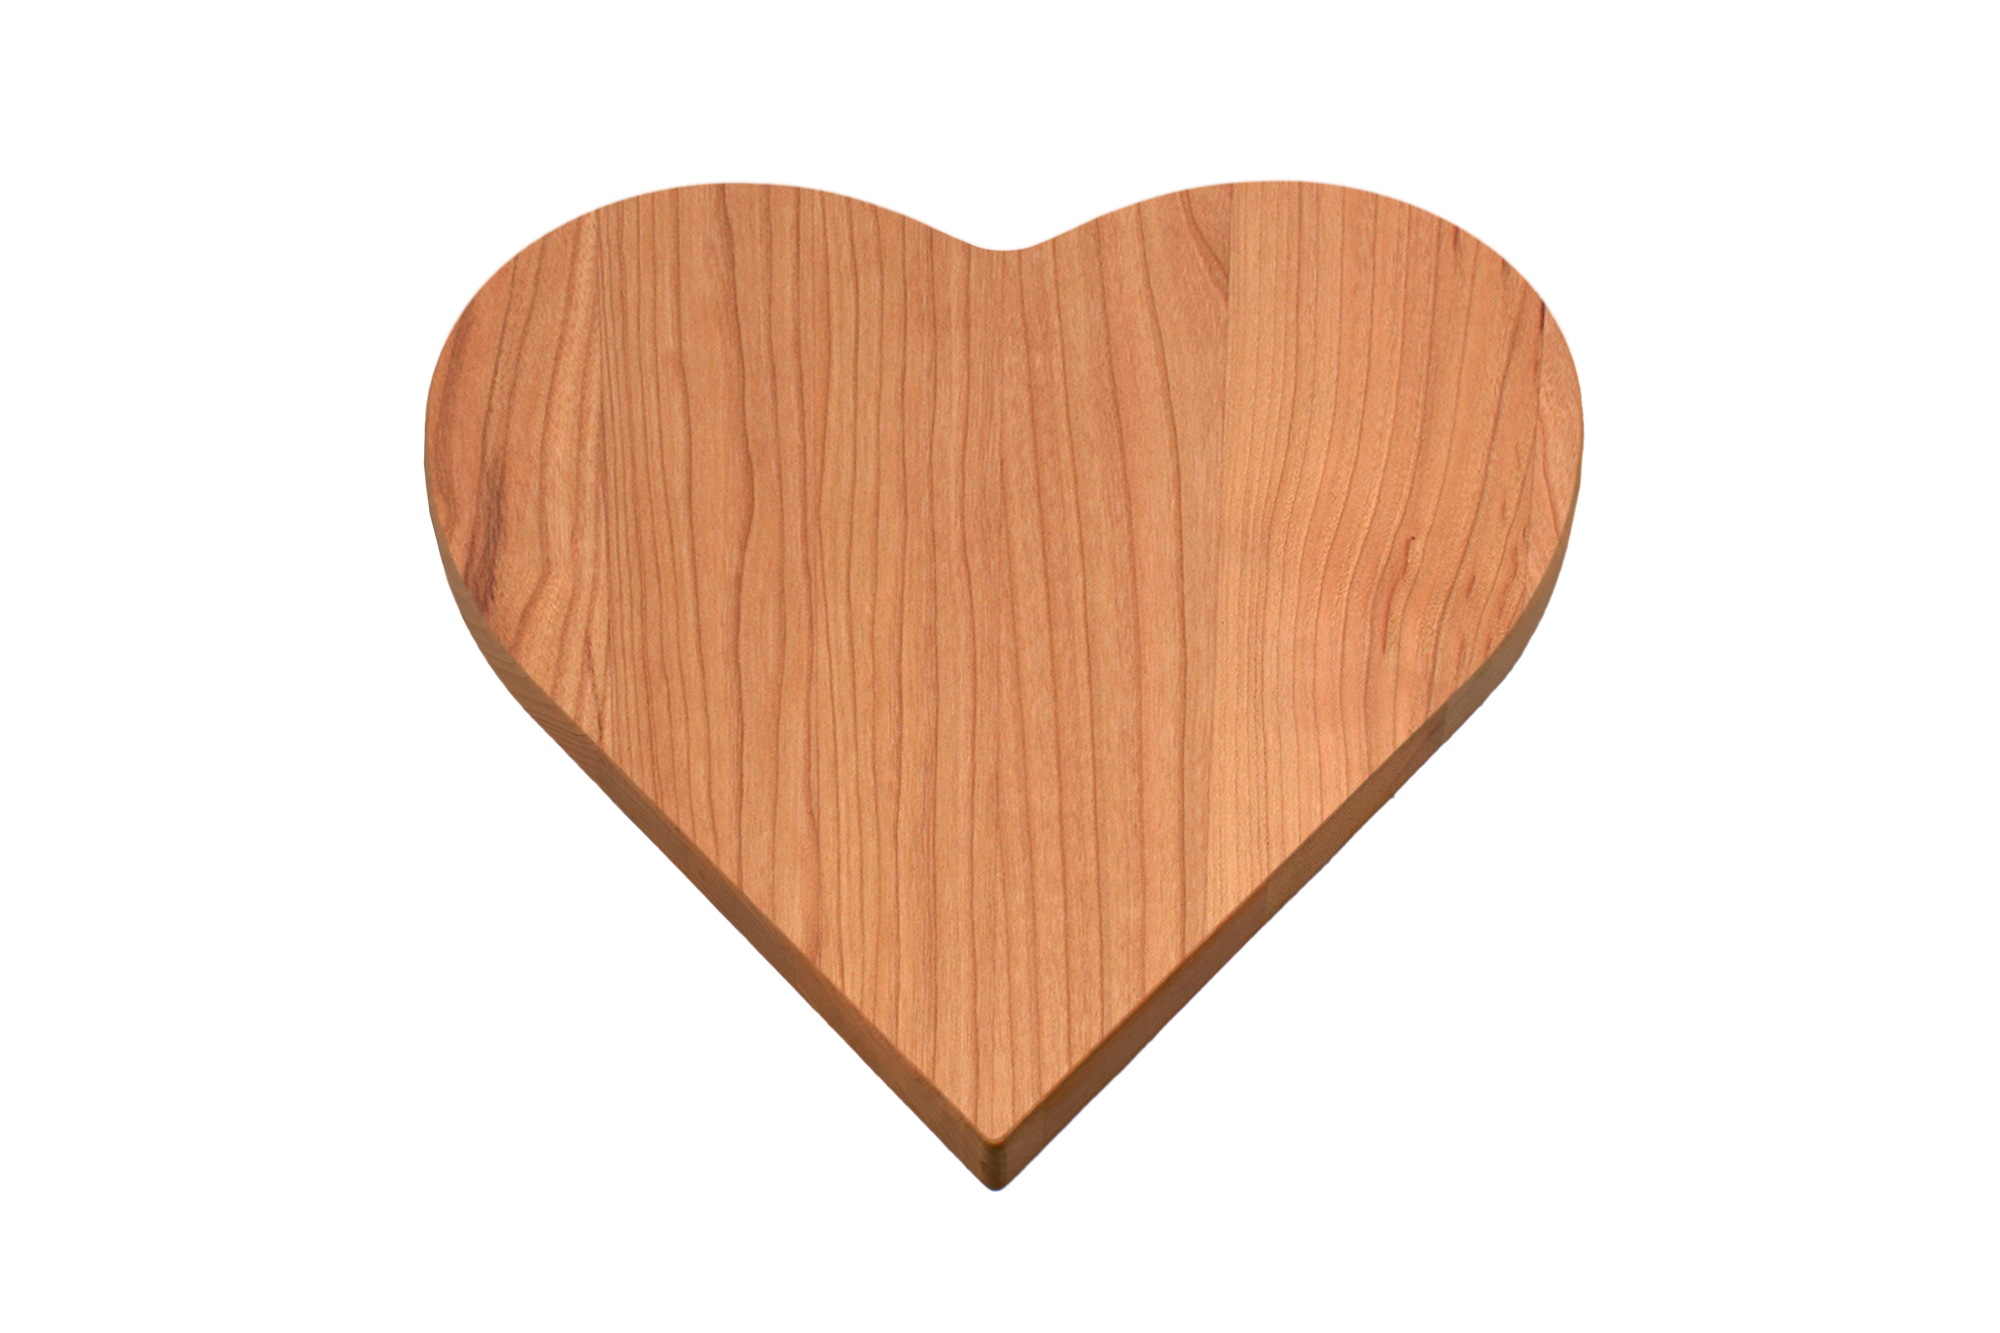 Novelty heart shaped cherry cutting board